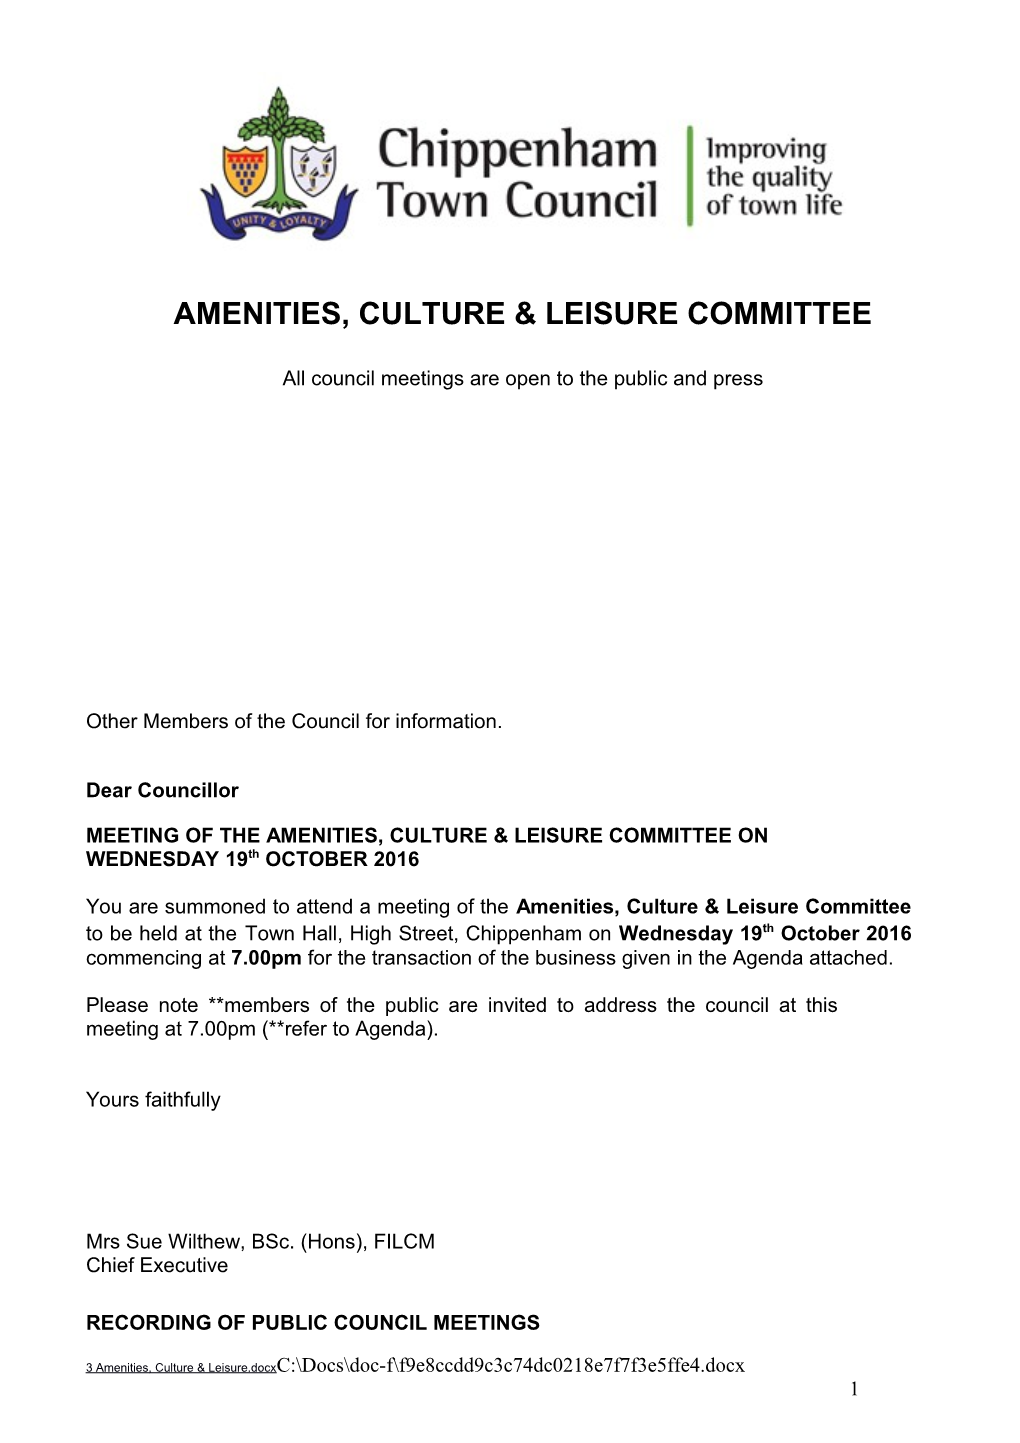 Amenities, Culture & Leisure Committee